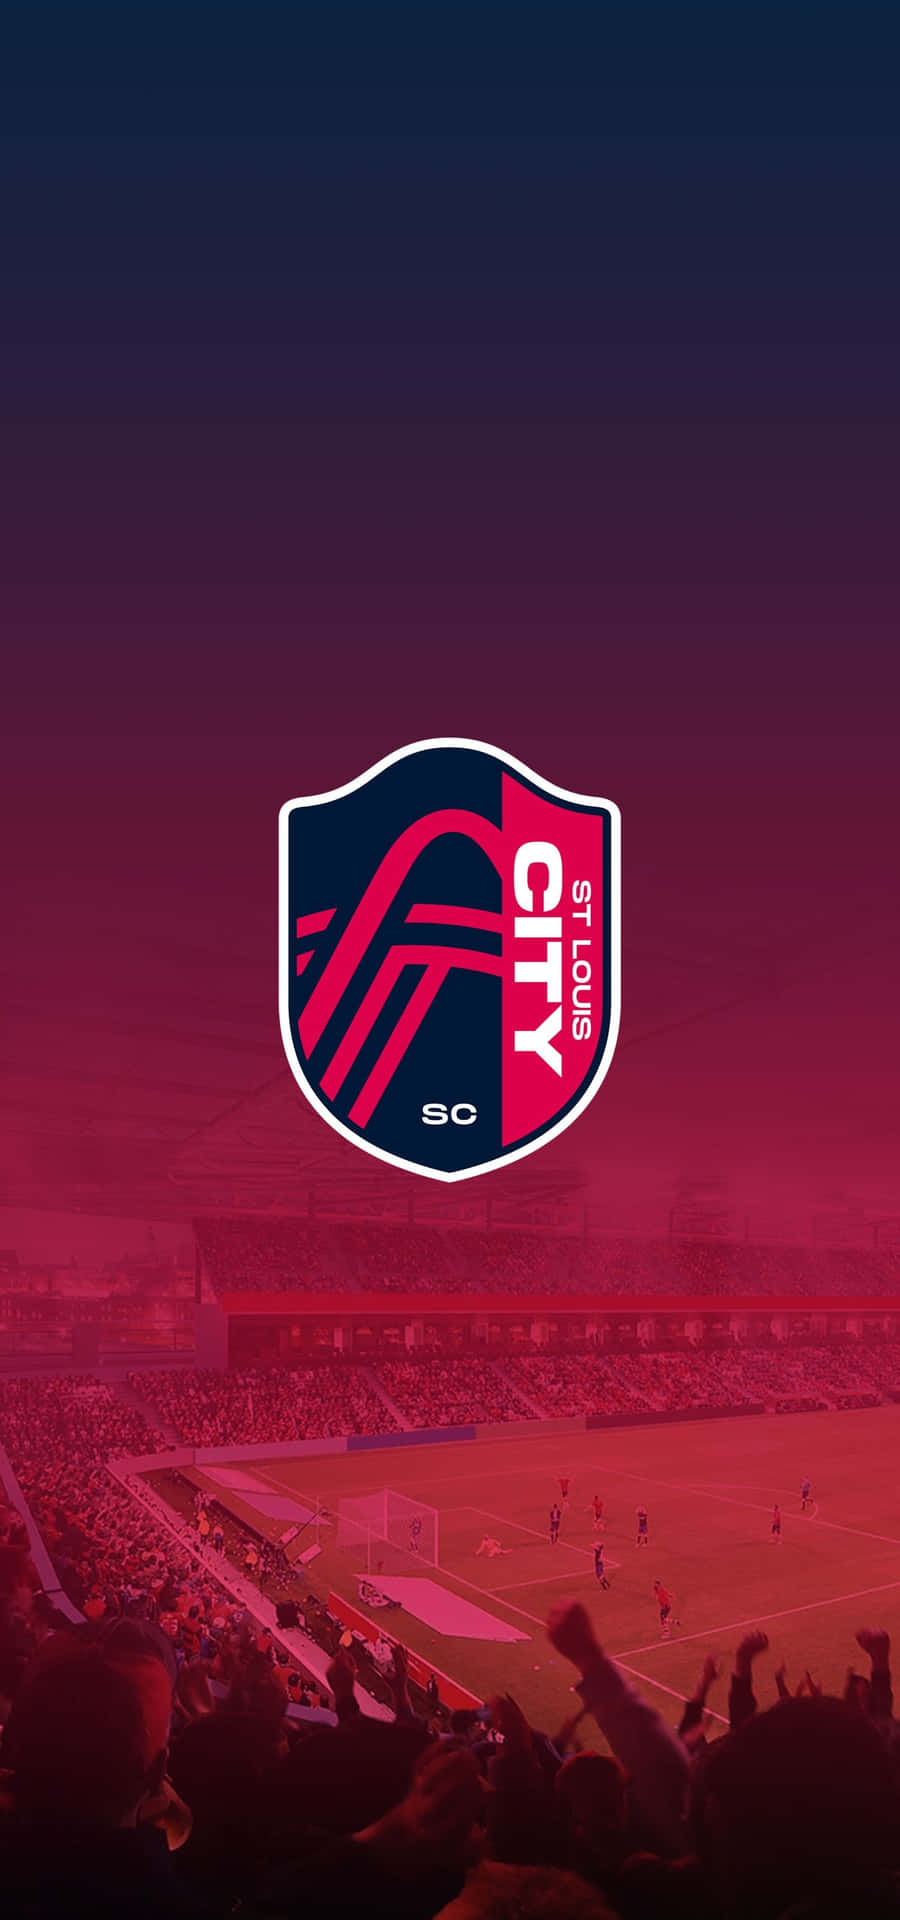 St. Louis City SC Fodbold Pink Image Wallpaper